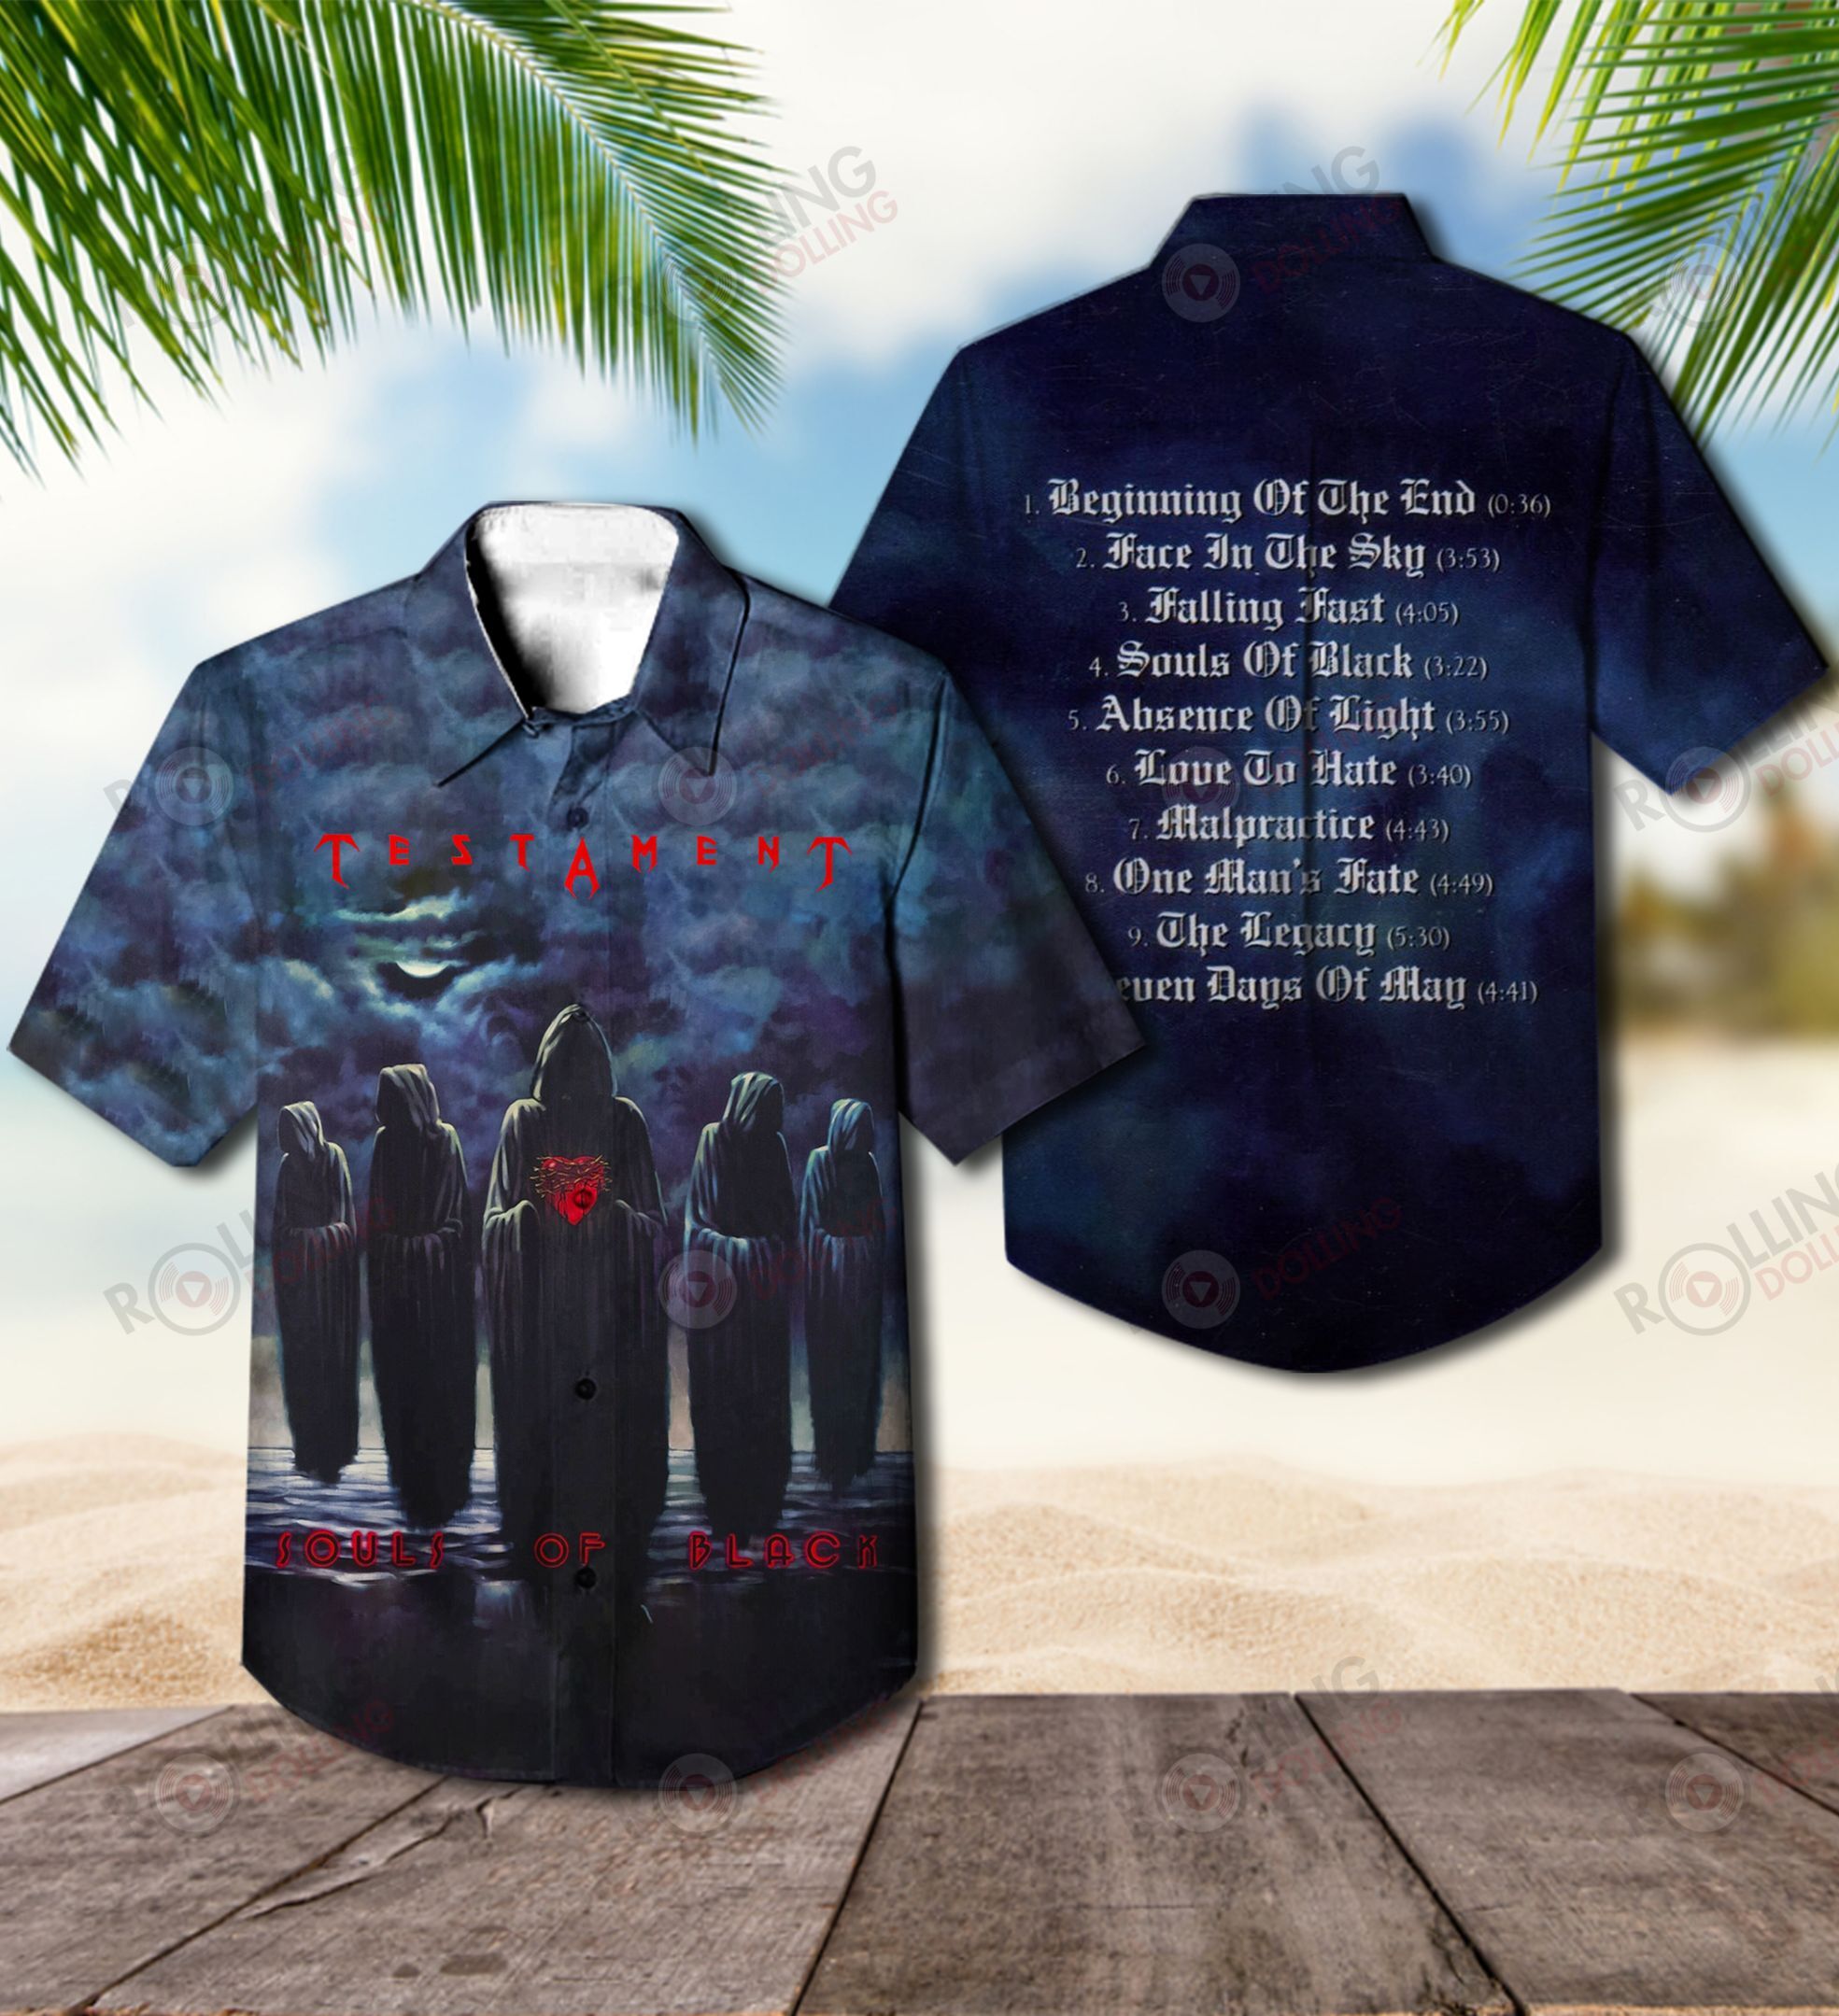 Regardless of their style, you will feel comfortable wearing Hawaiian Shirt 187